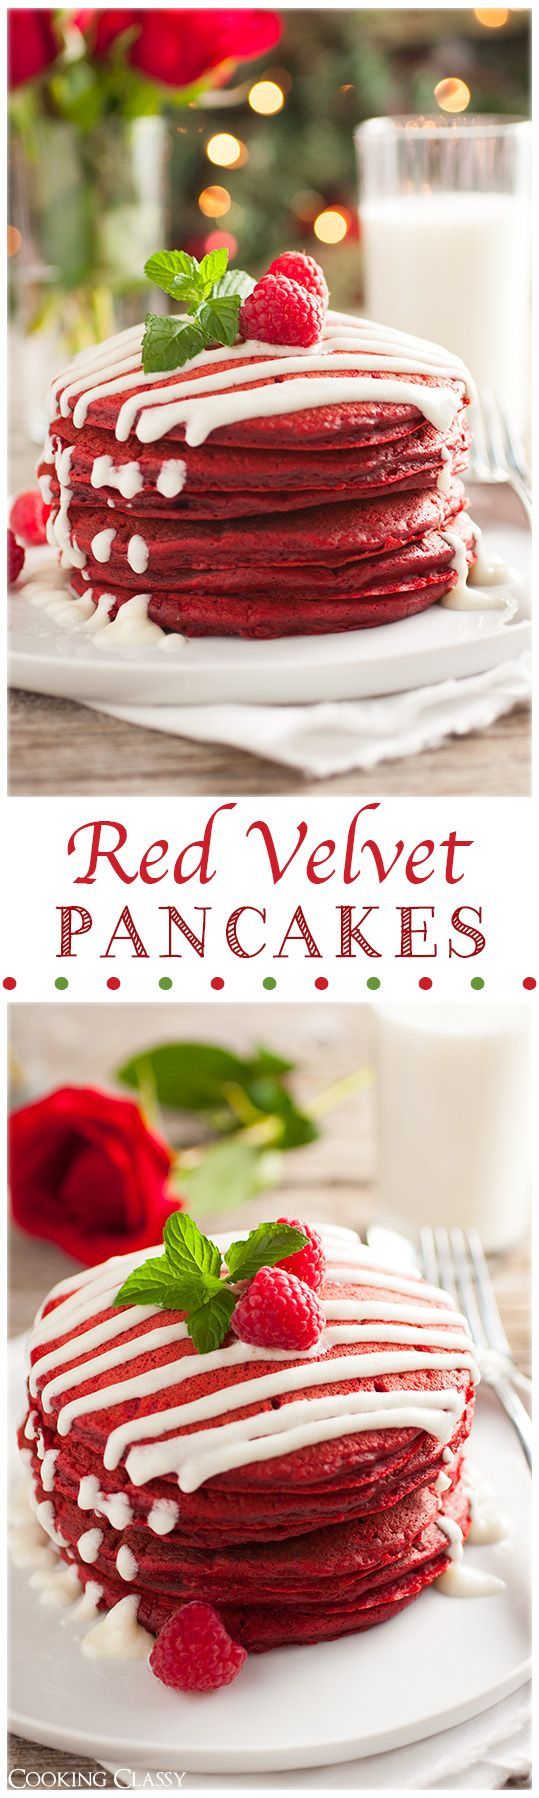 Red Velvet Pancakes with Cr